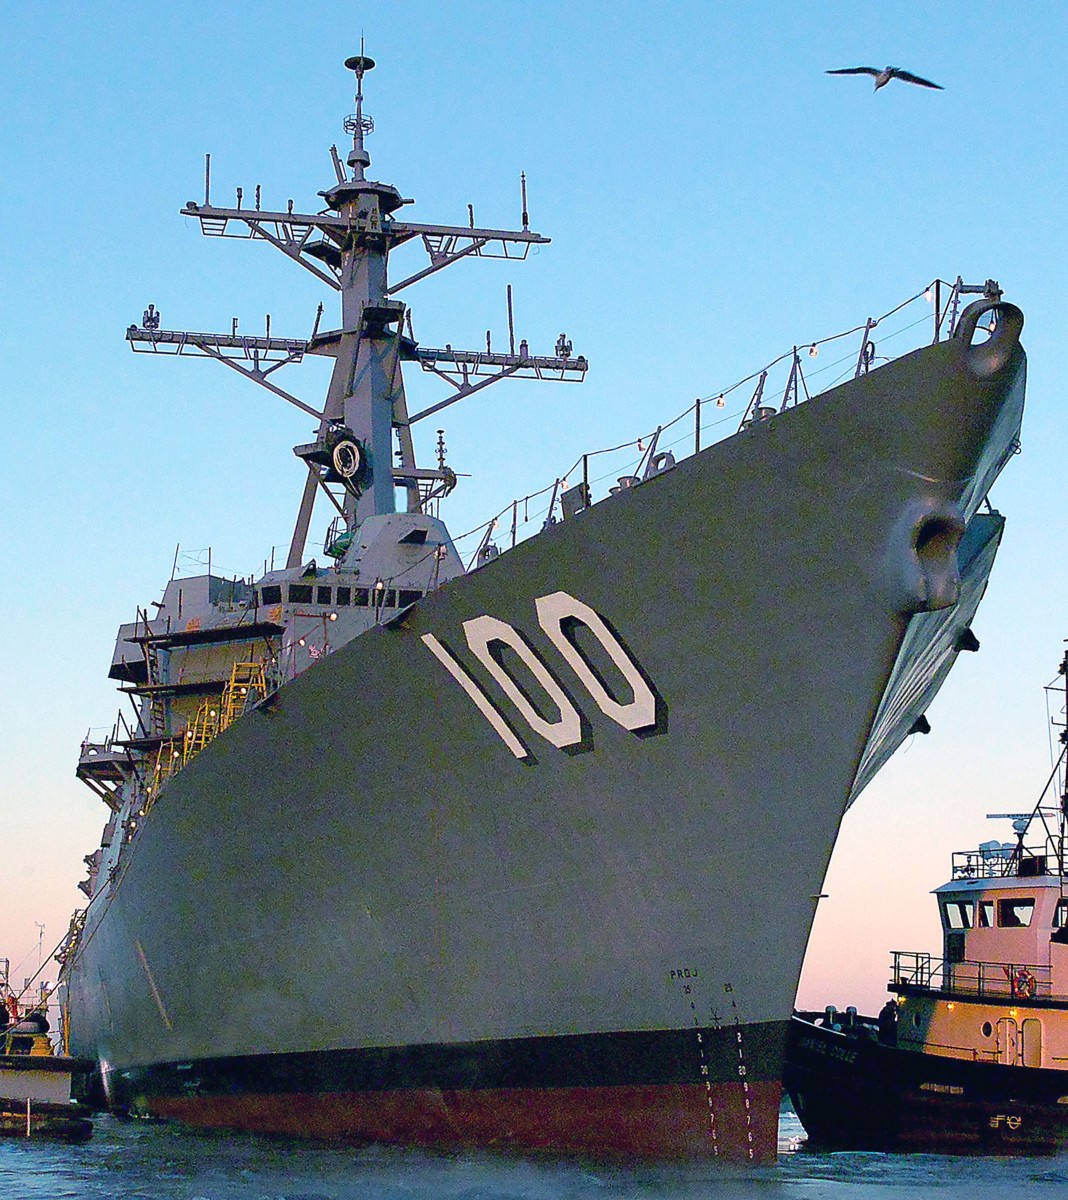 ddg-100 uss kidd arleigh burke class guided missile destroyer aegis ingalls shipbuilding pascagoula mississippi 02